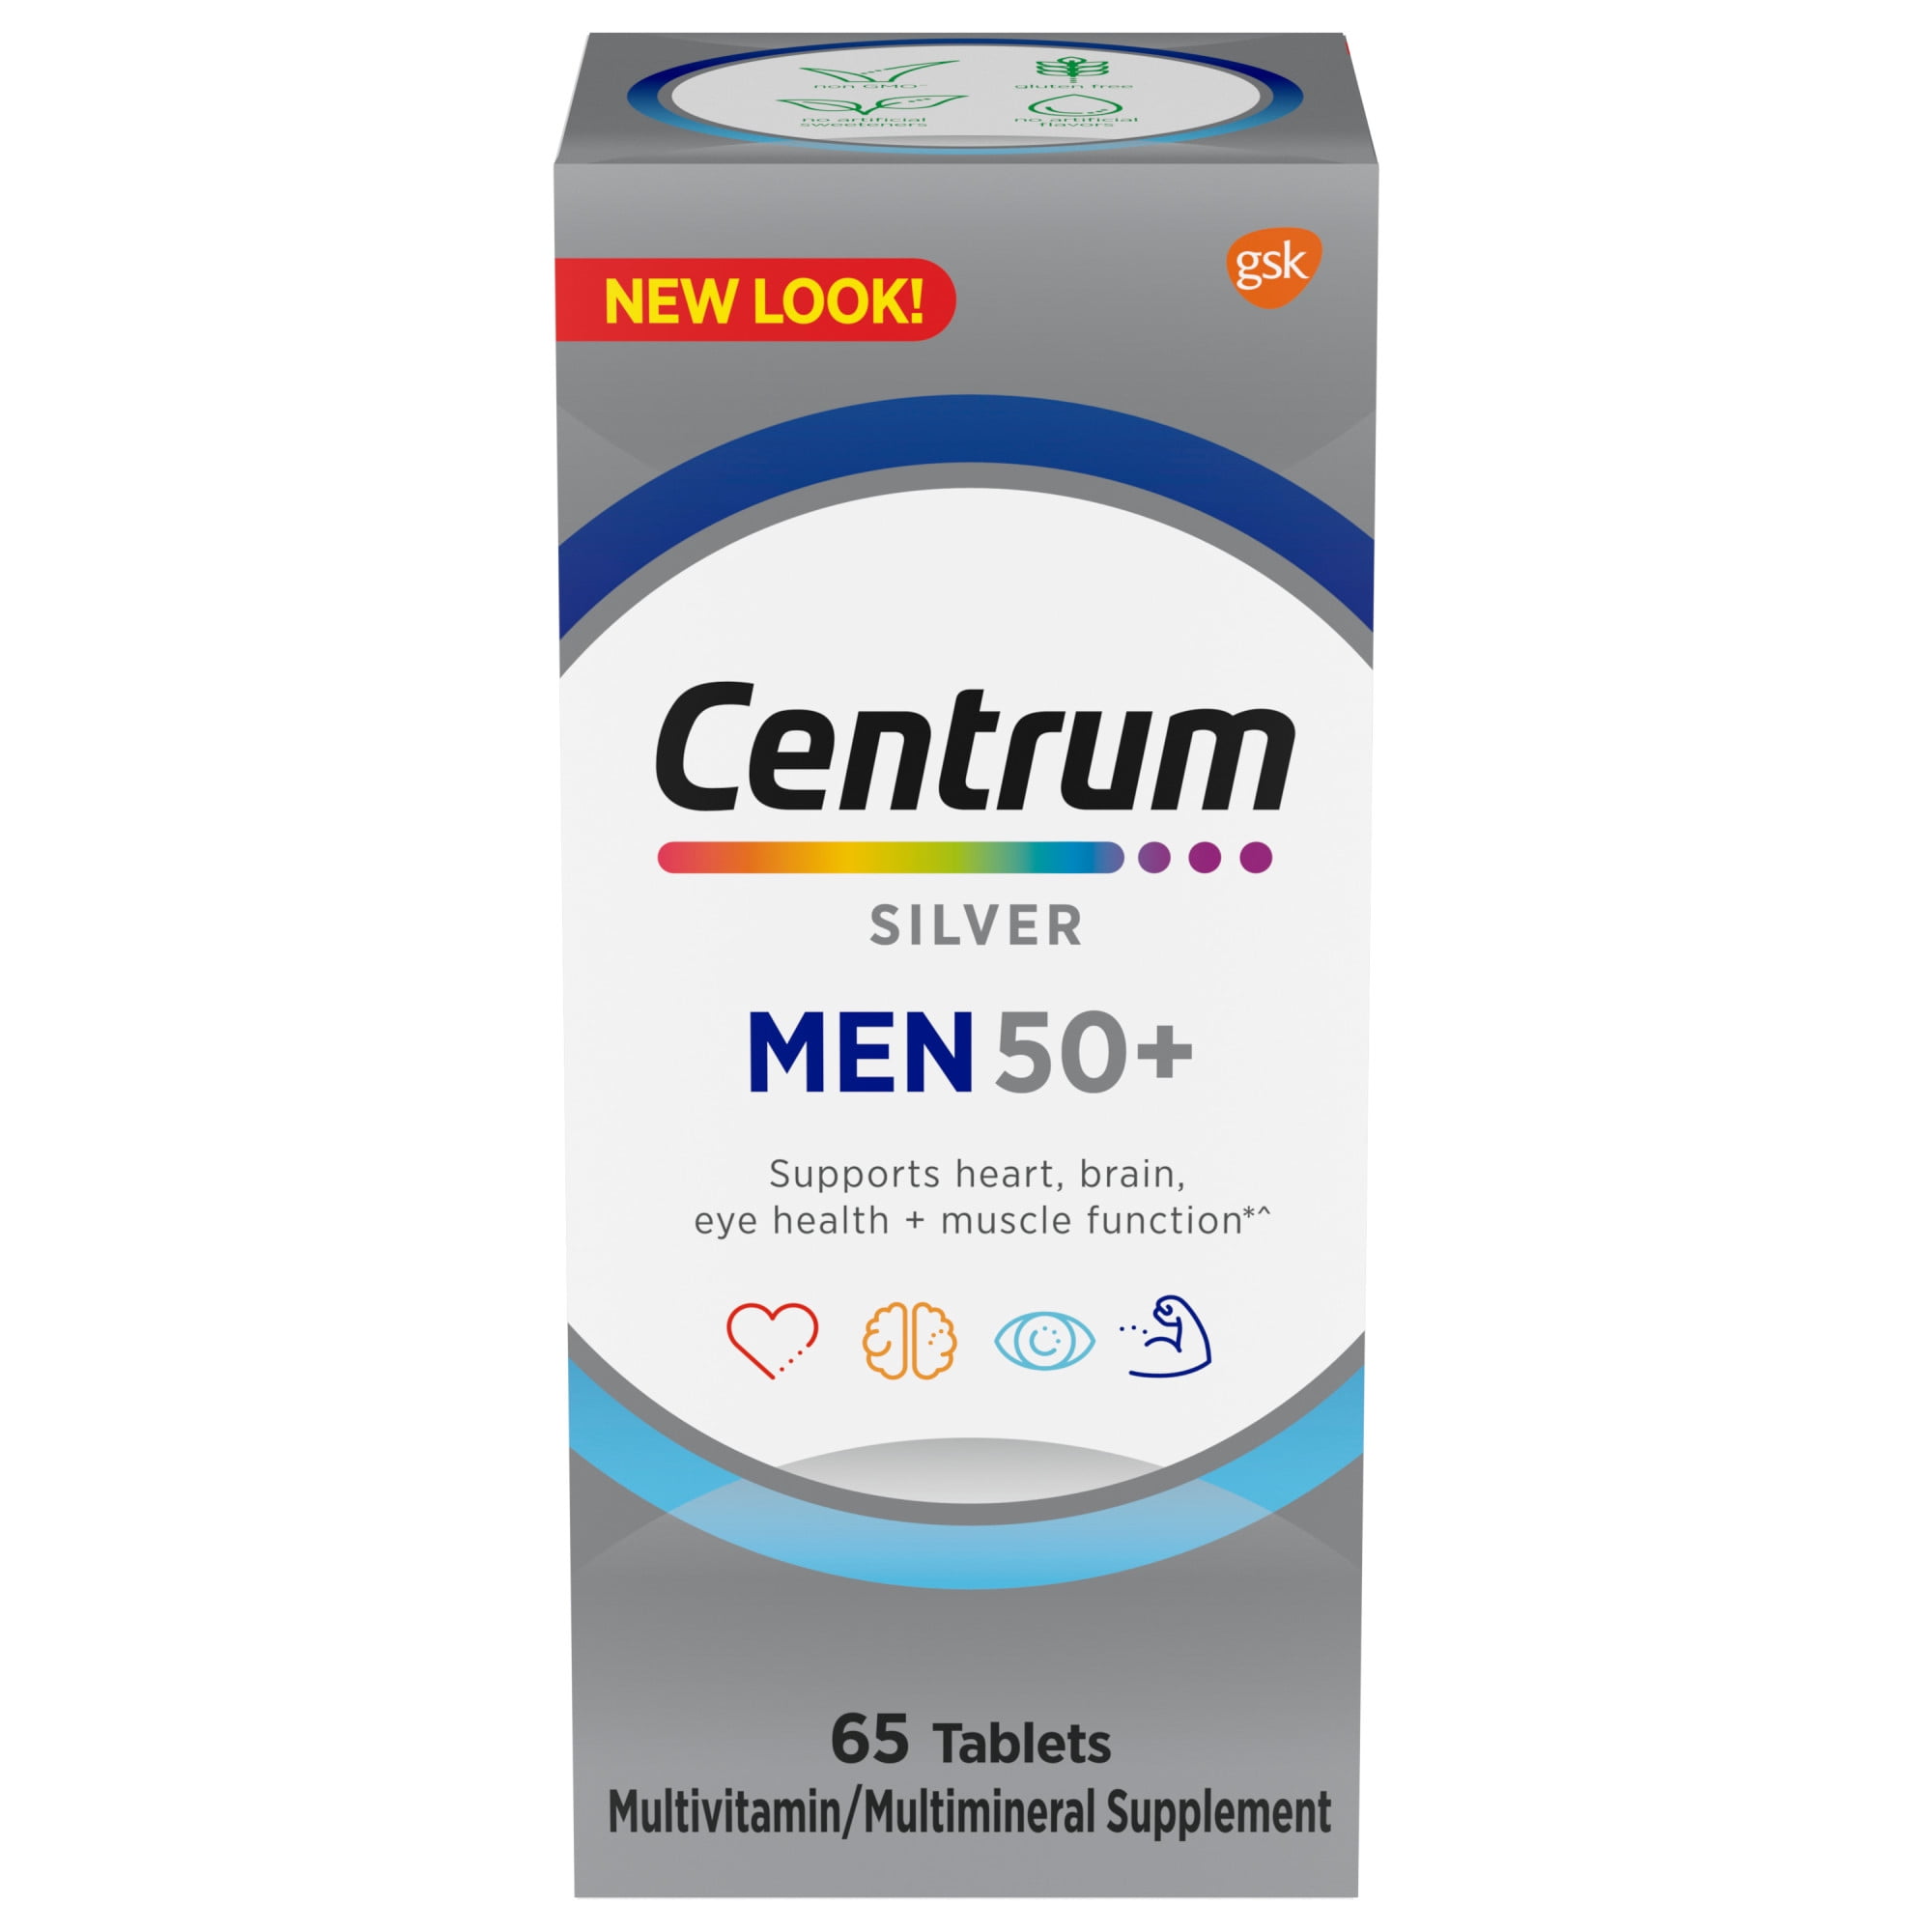 Centrum Silver Men 50 Plus Multivitamin Supplement Tablets, 65 Count